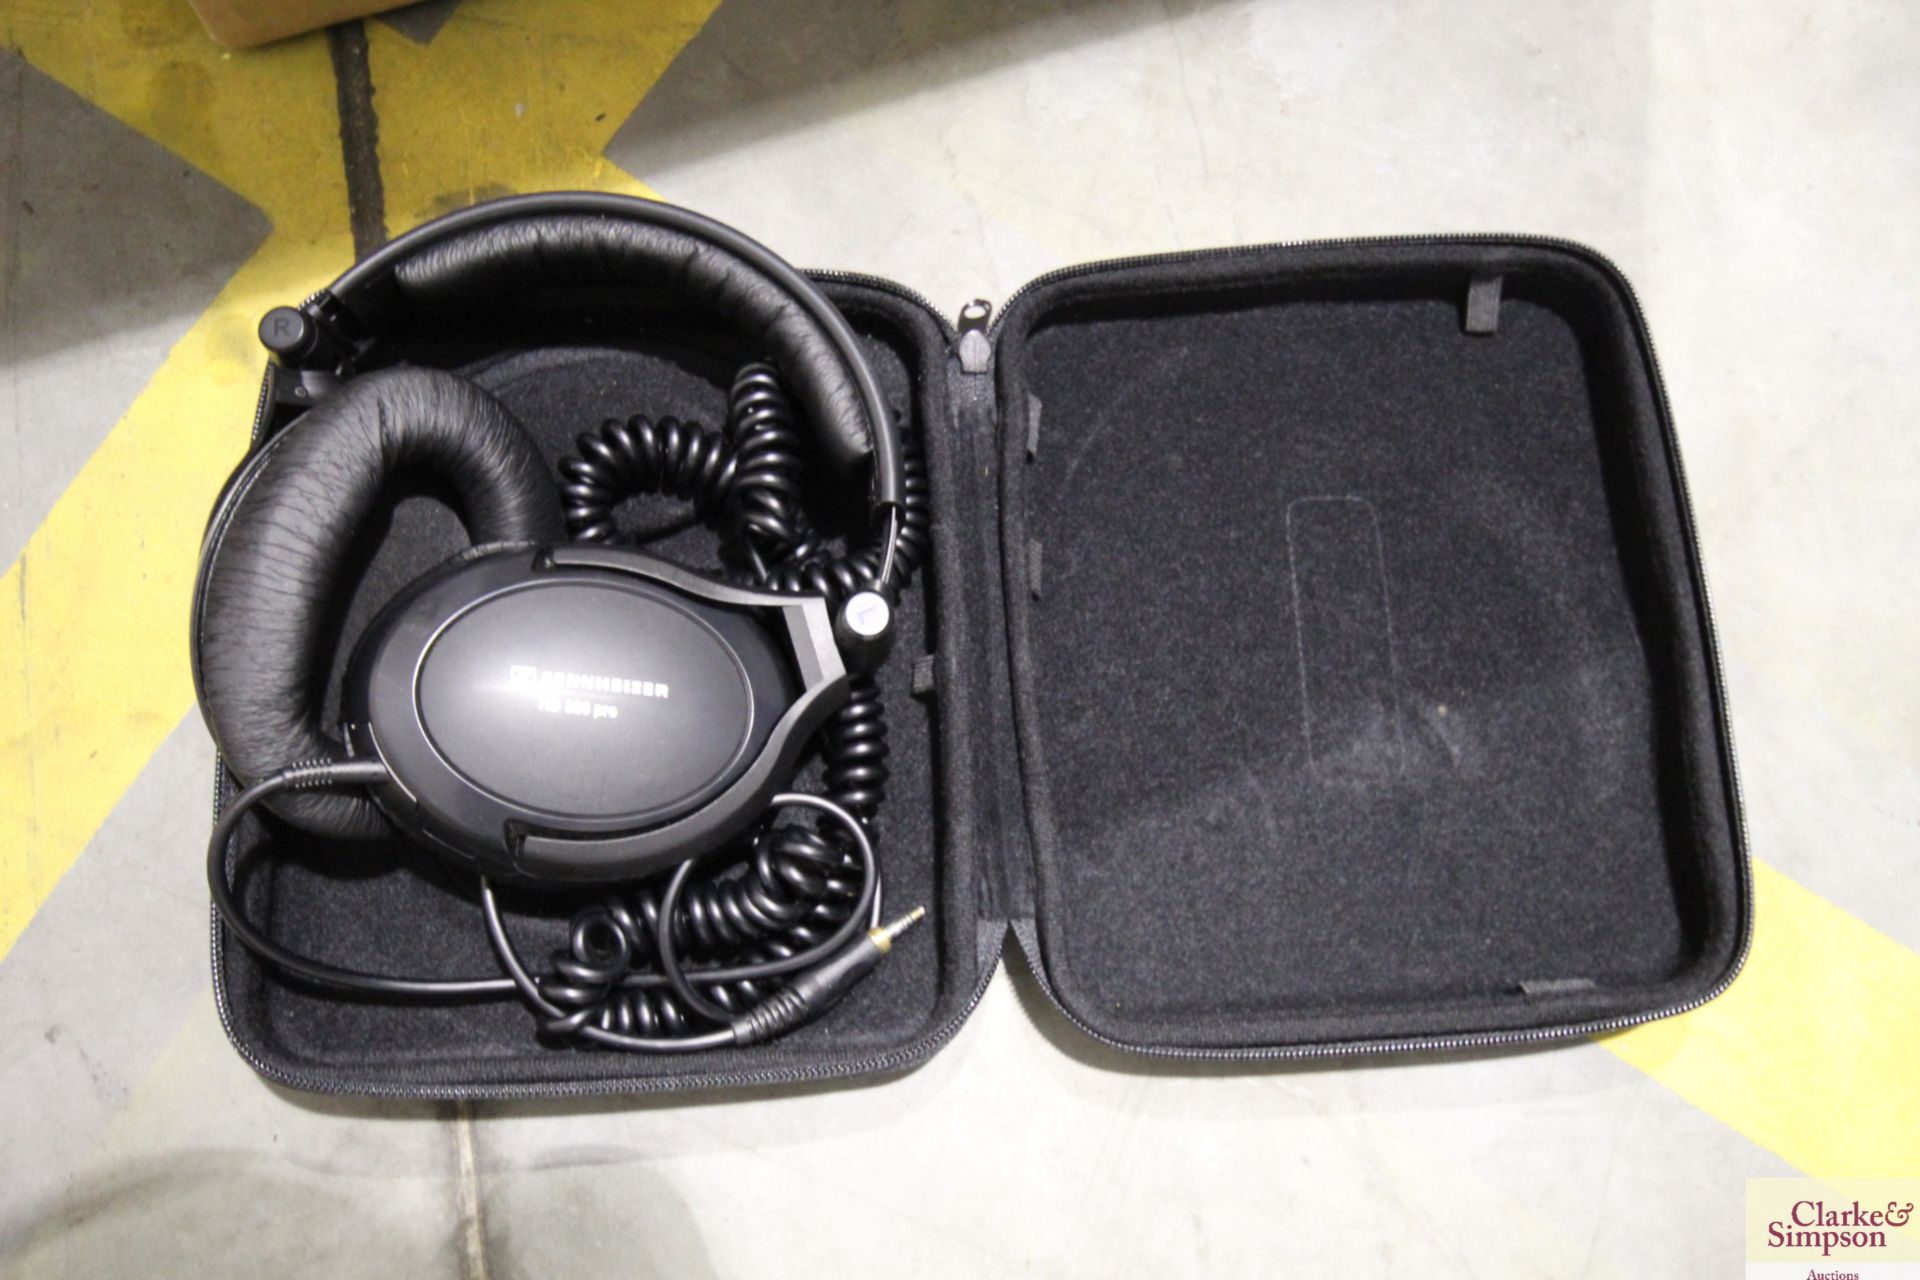 6x Sennheiser HD380 Pro headphones in cases, and 3x Sennheiser HD4.20S headphones in boxes. V - Image 4 of 4